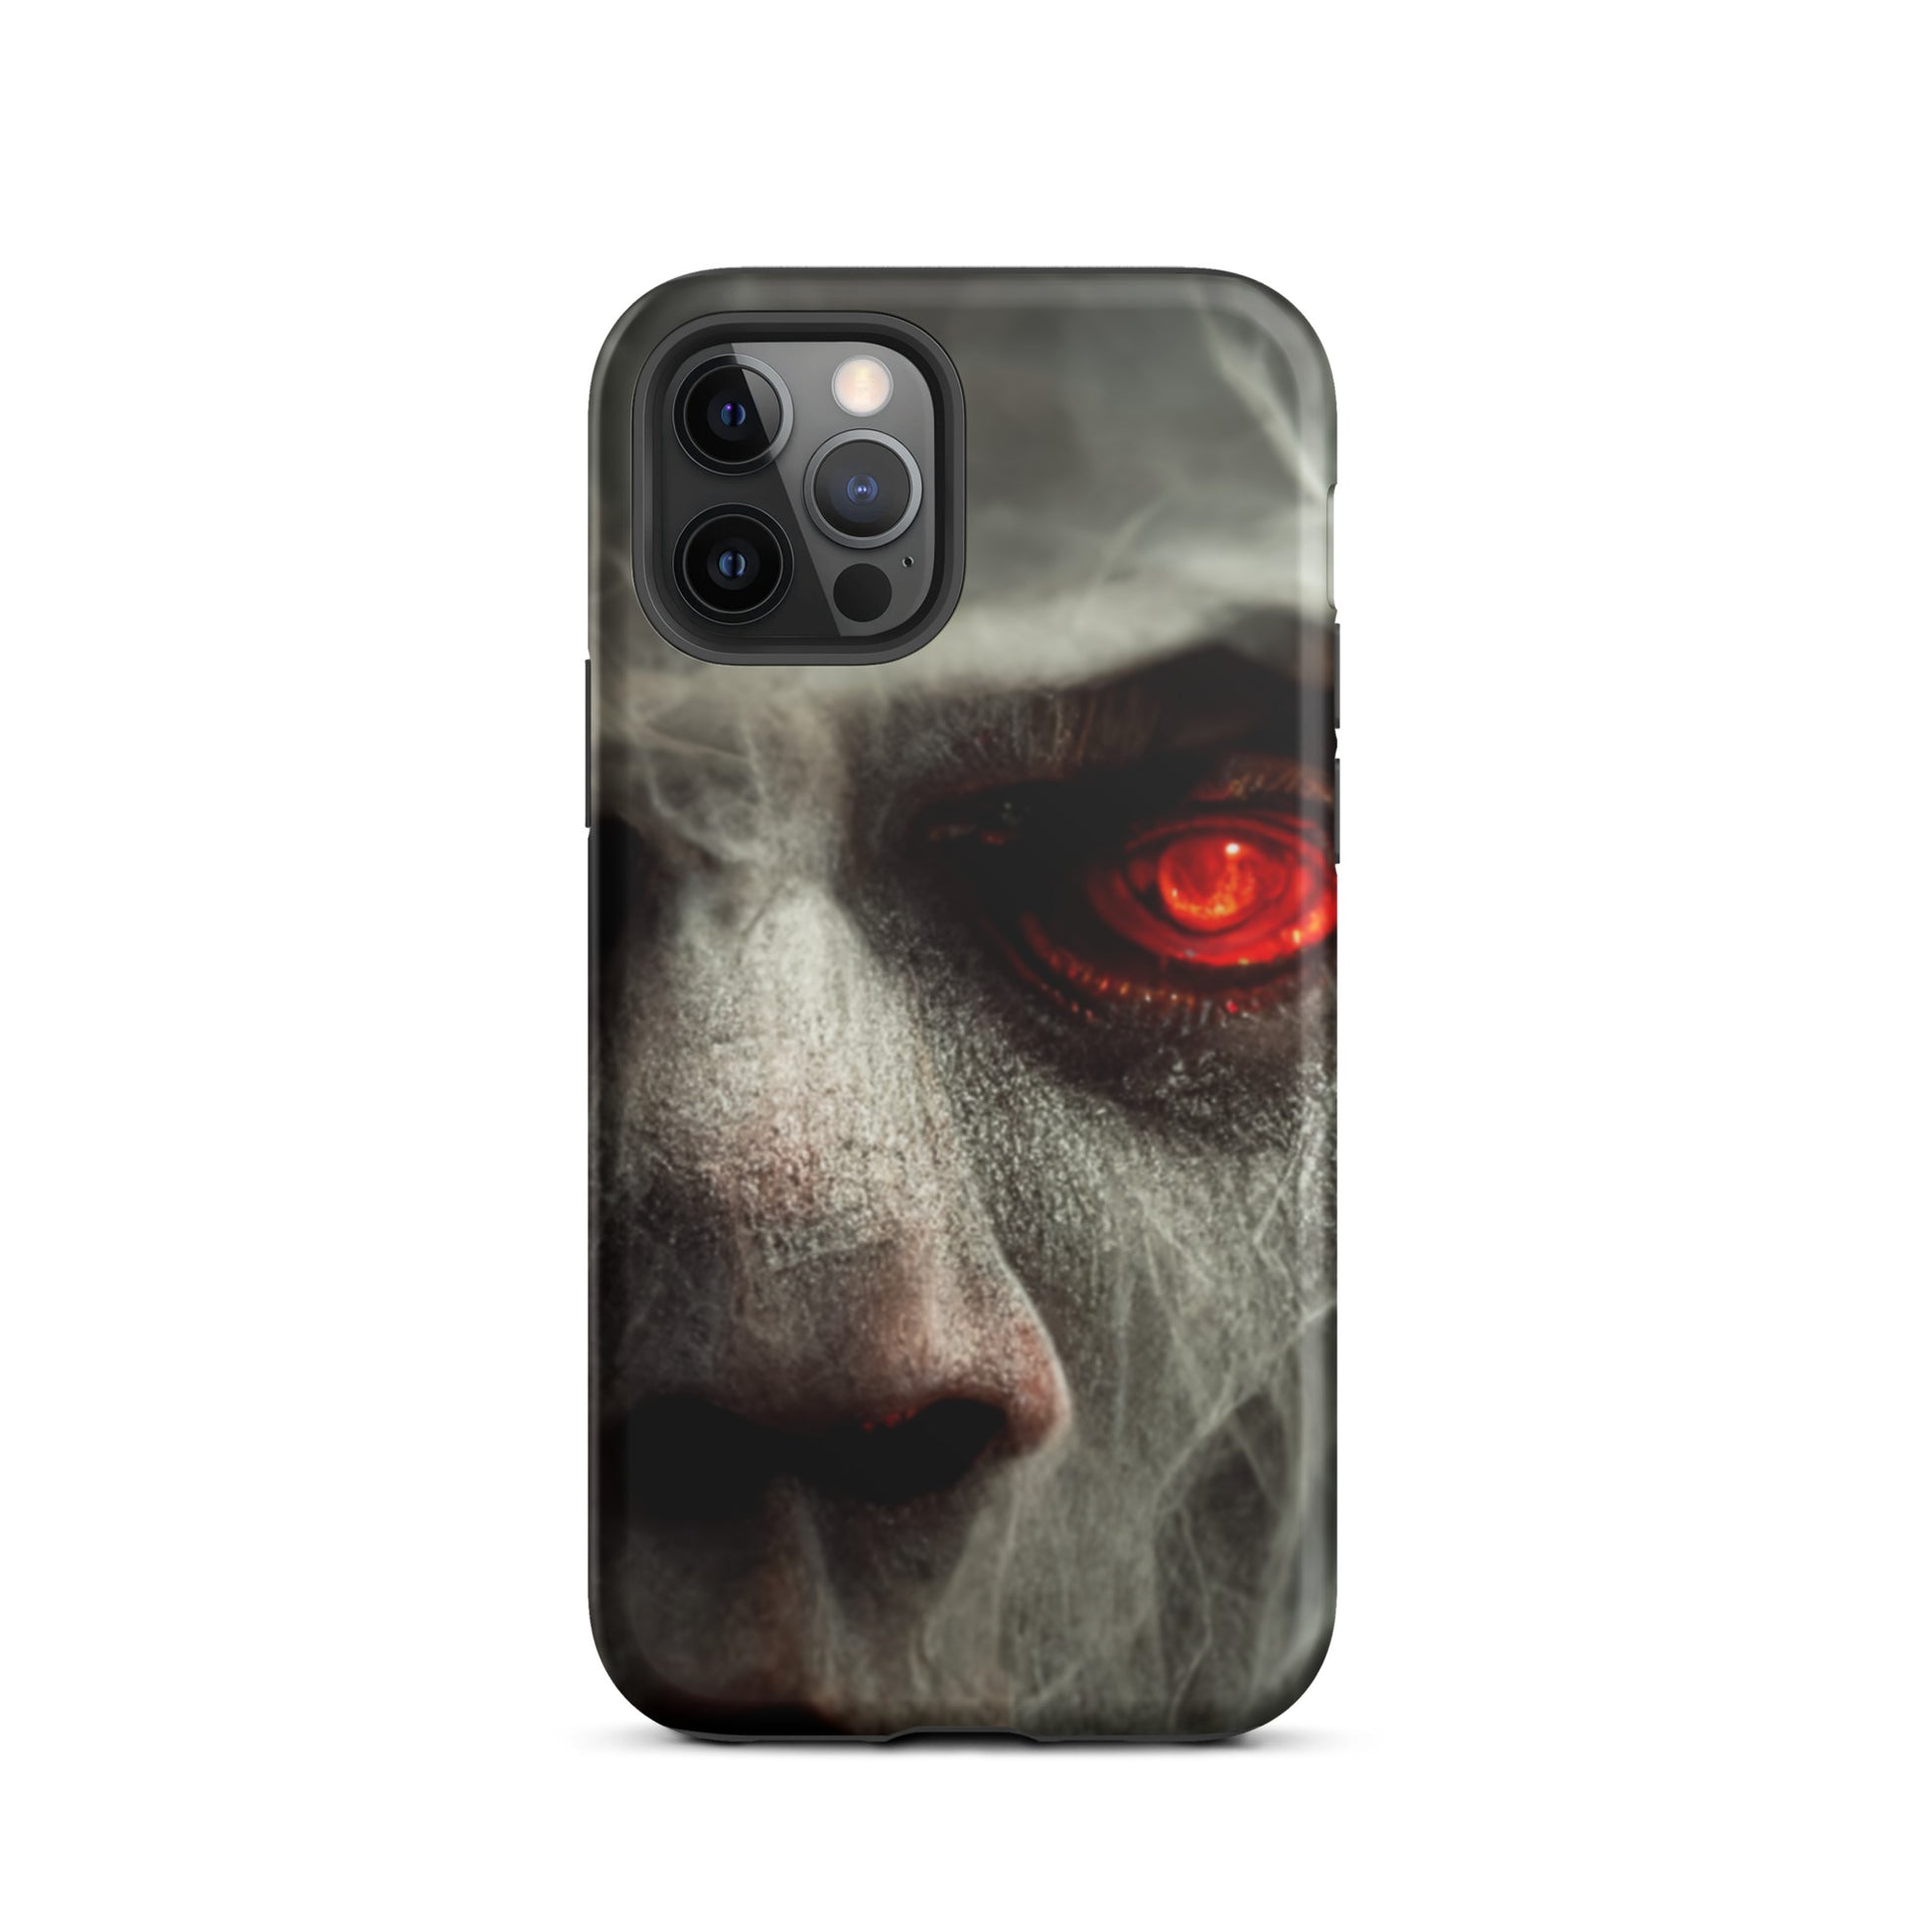 Maraheim Spectre Tough iPhone case - Nick Olsson Digital Design